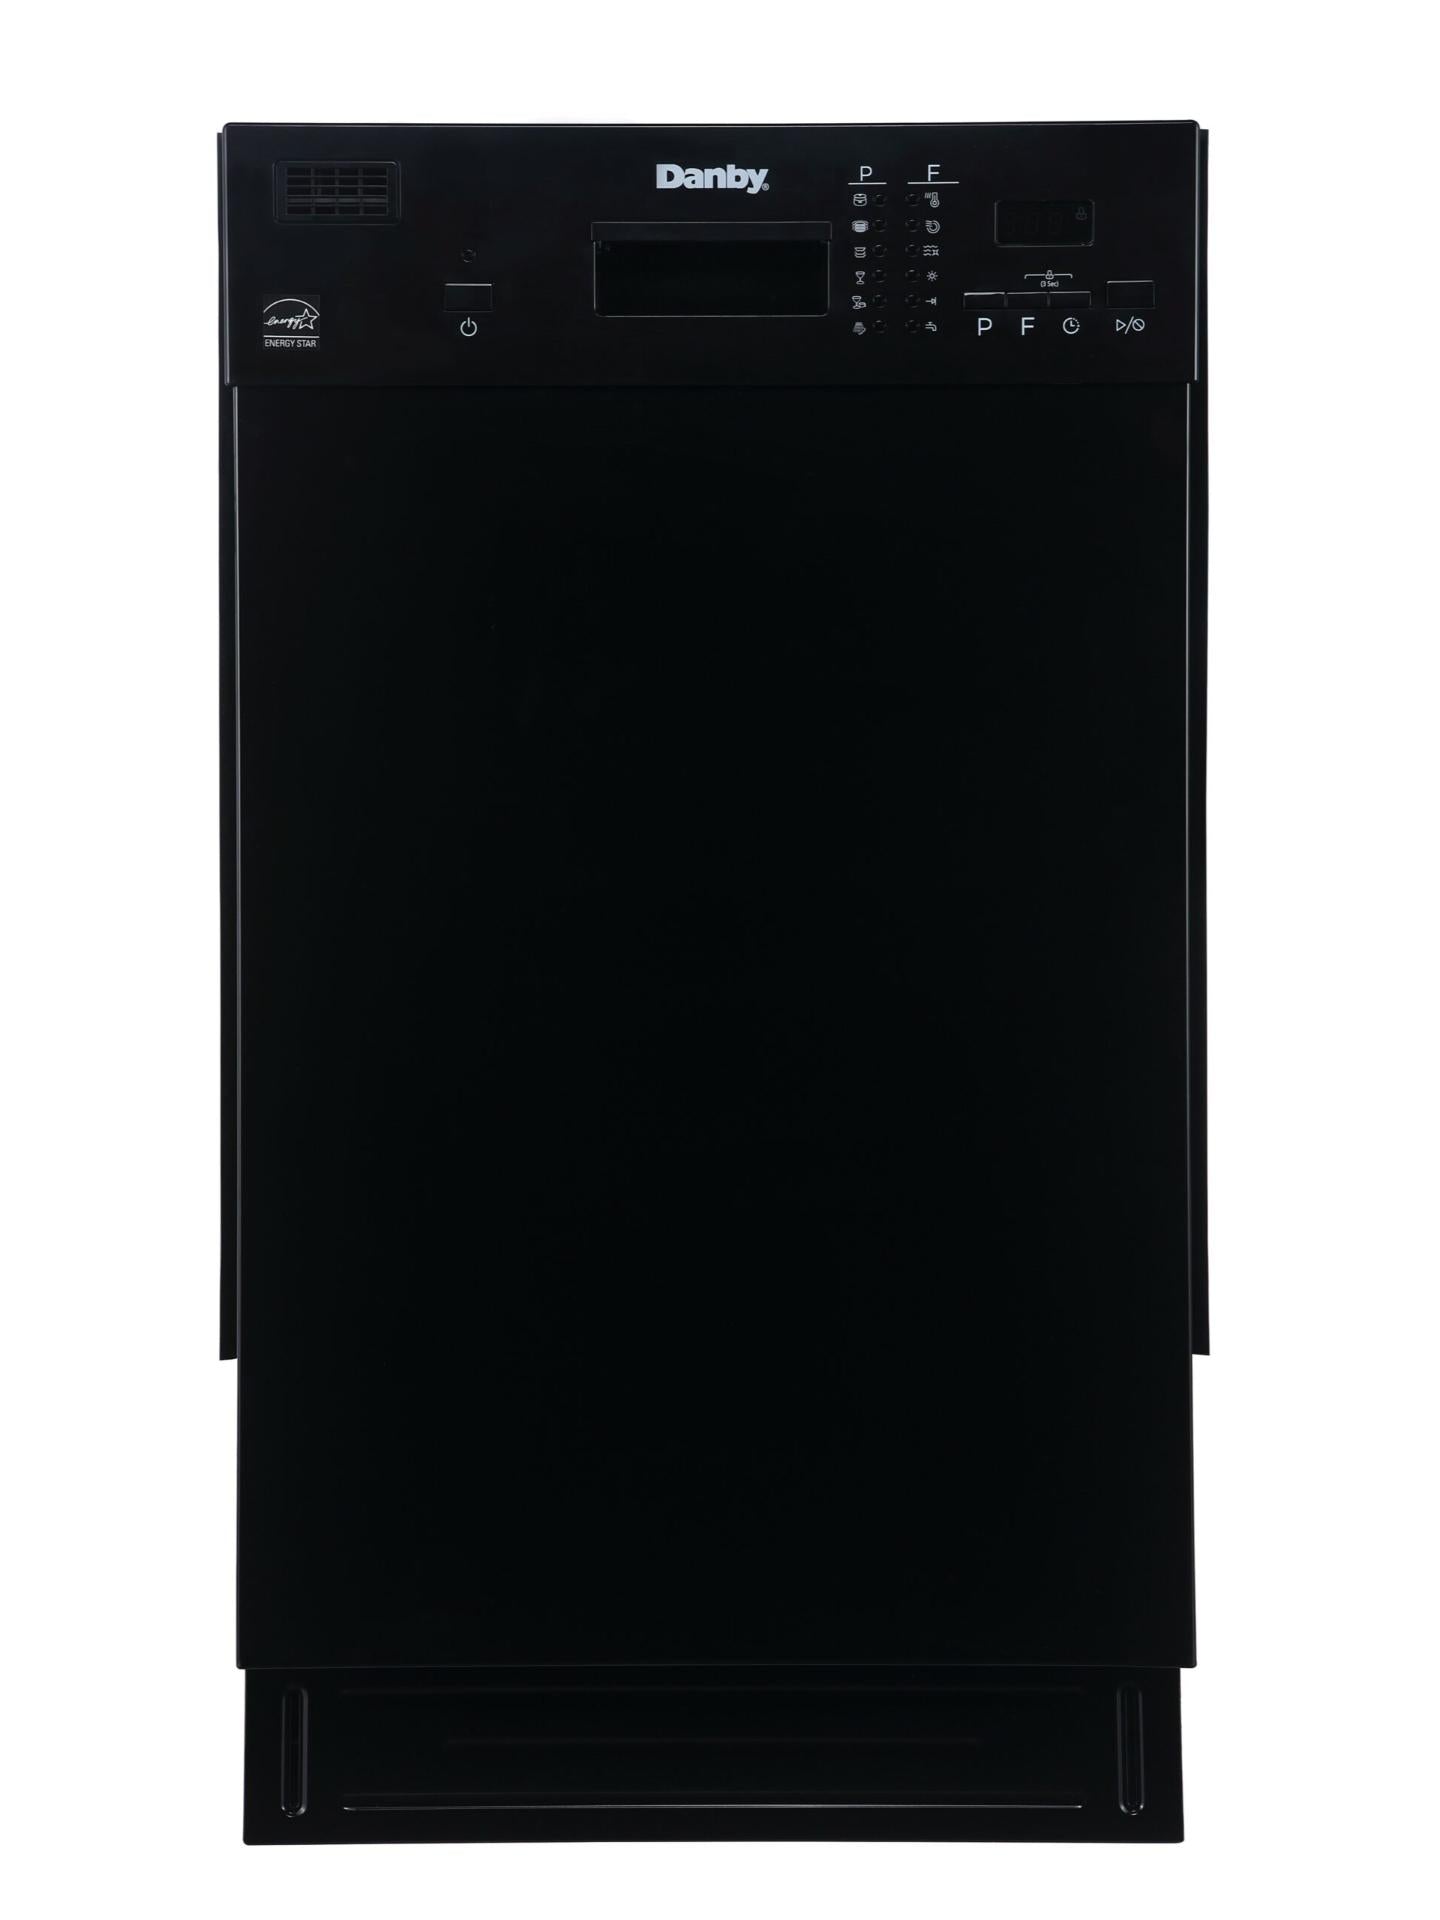 Danby 18" Wide Built-in Dishwasher in Black